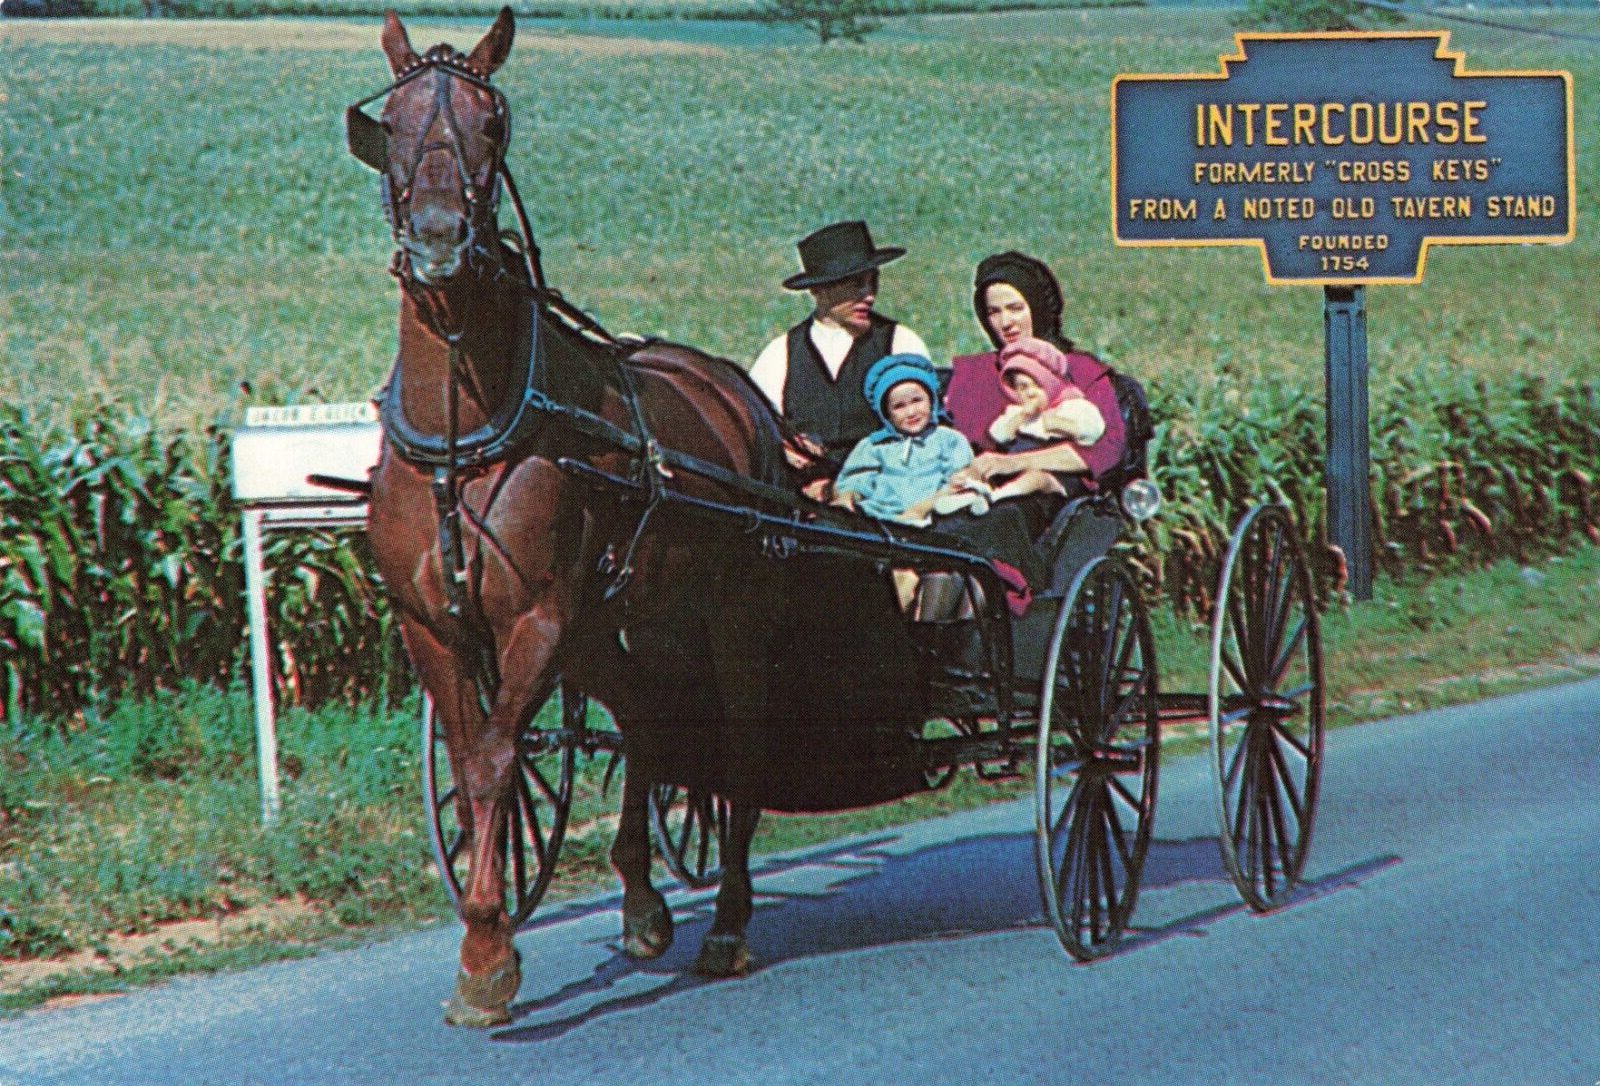 Intercourse PA Pennsylvania, Horse Carriage, Amish Family, Vintage Postcard